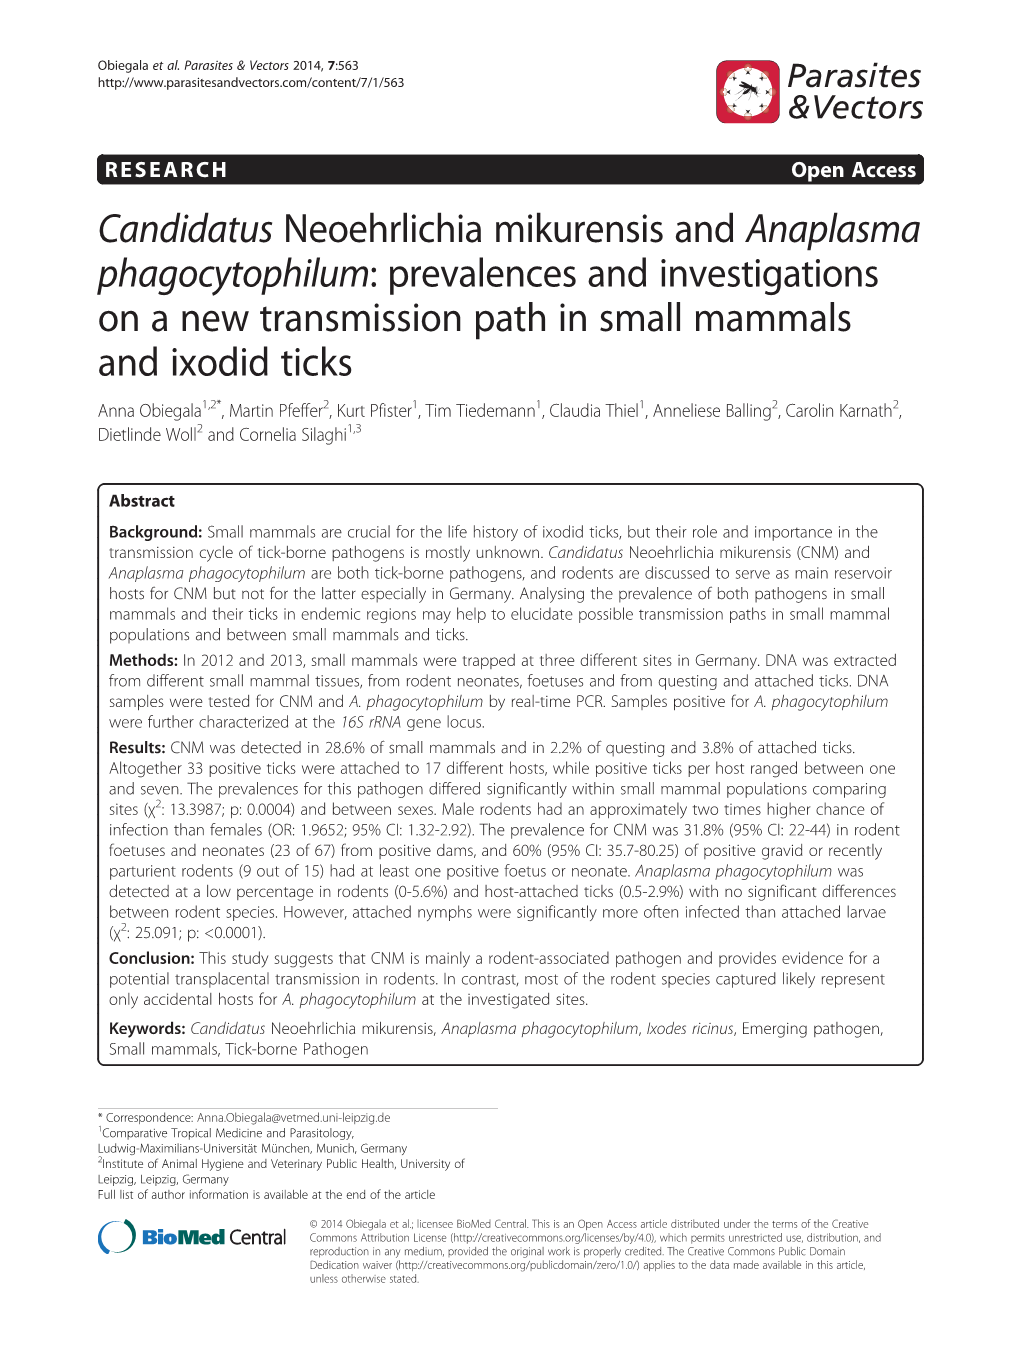 Candidatus Neoehrlichia Mikurensis and Anaplasma